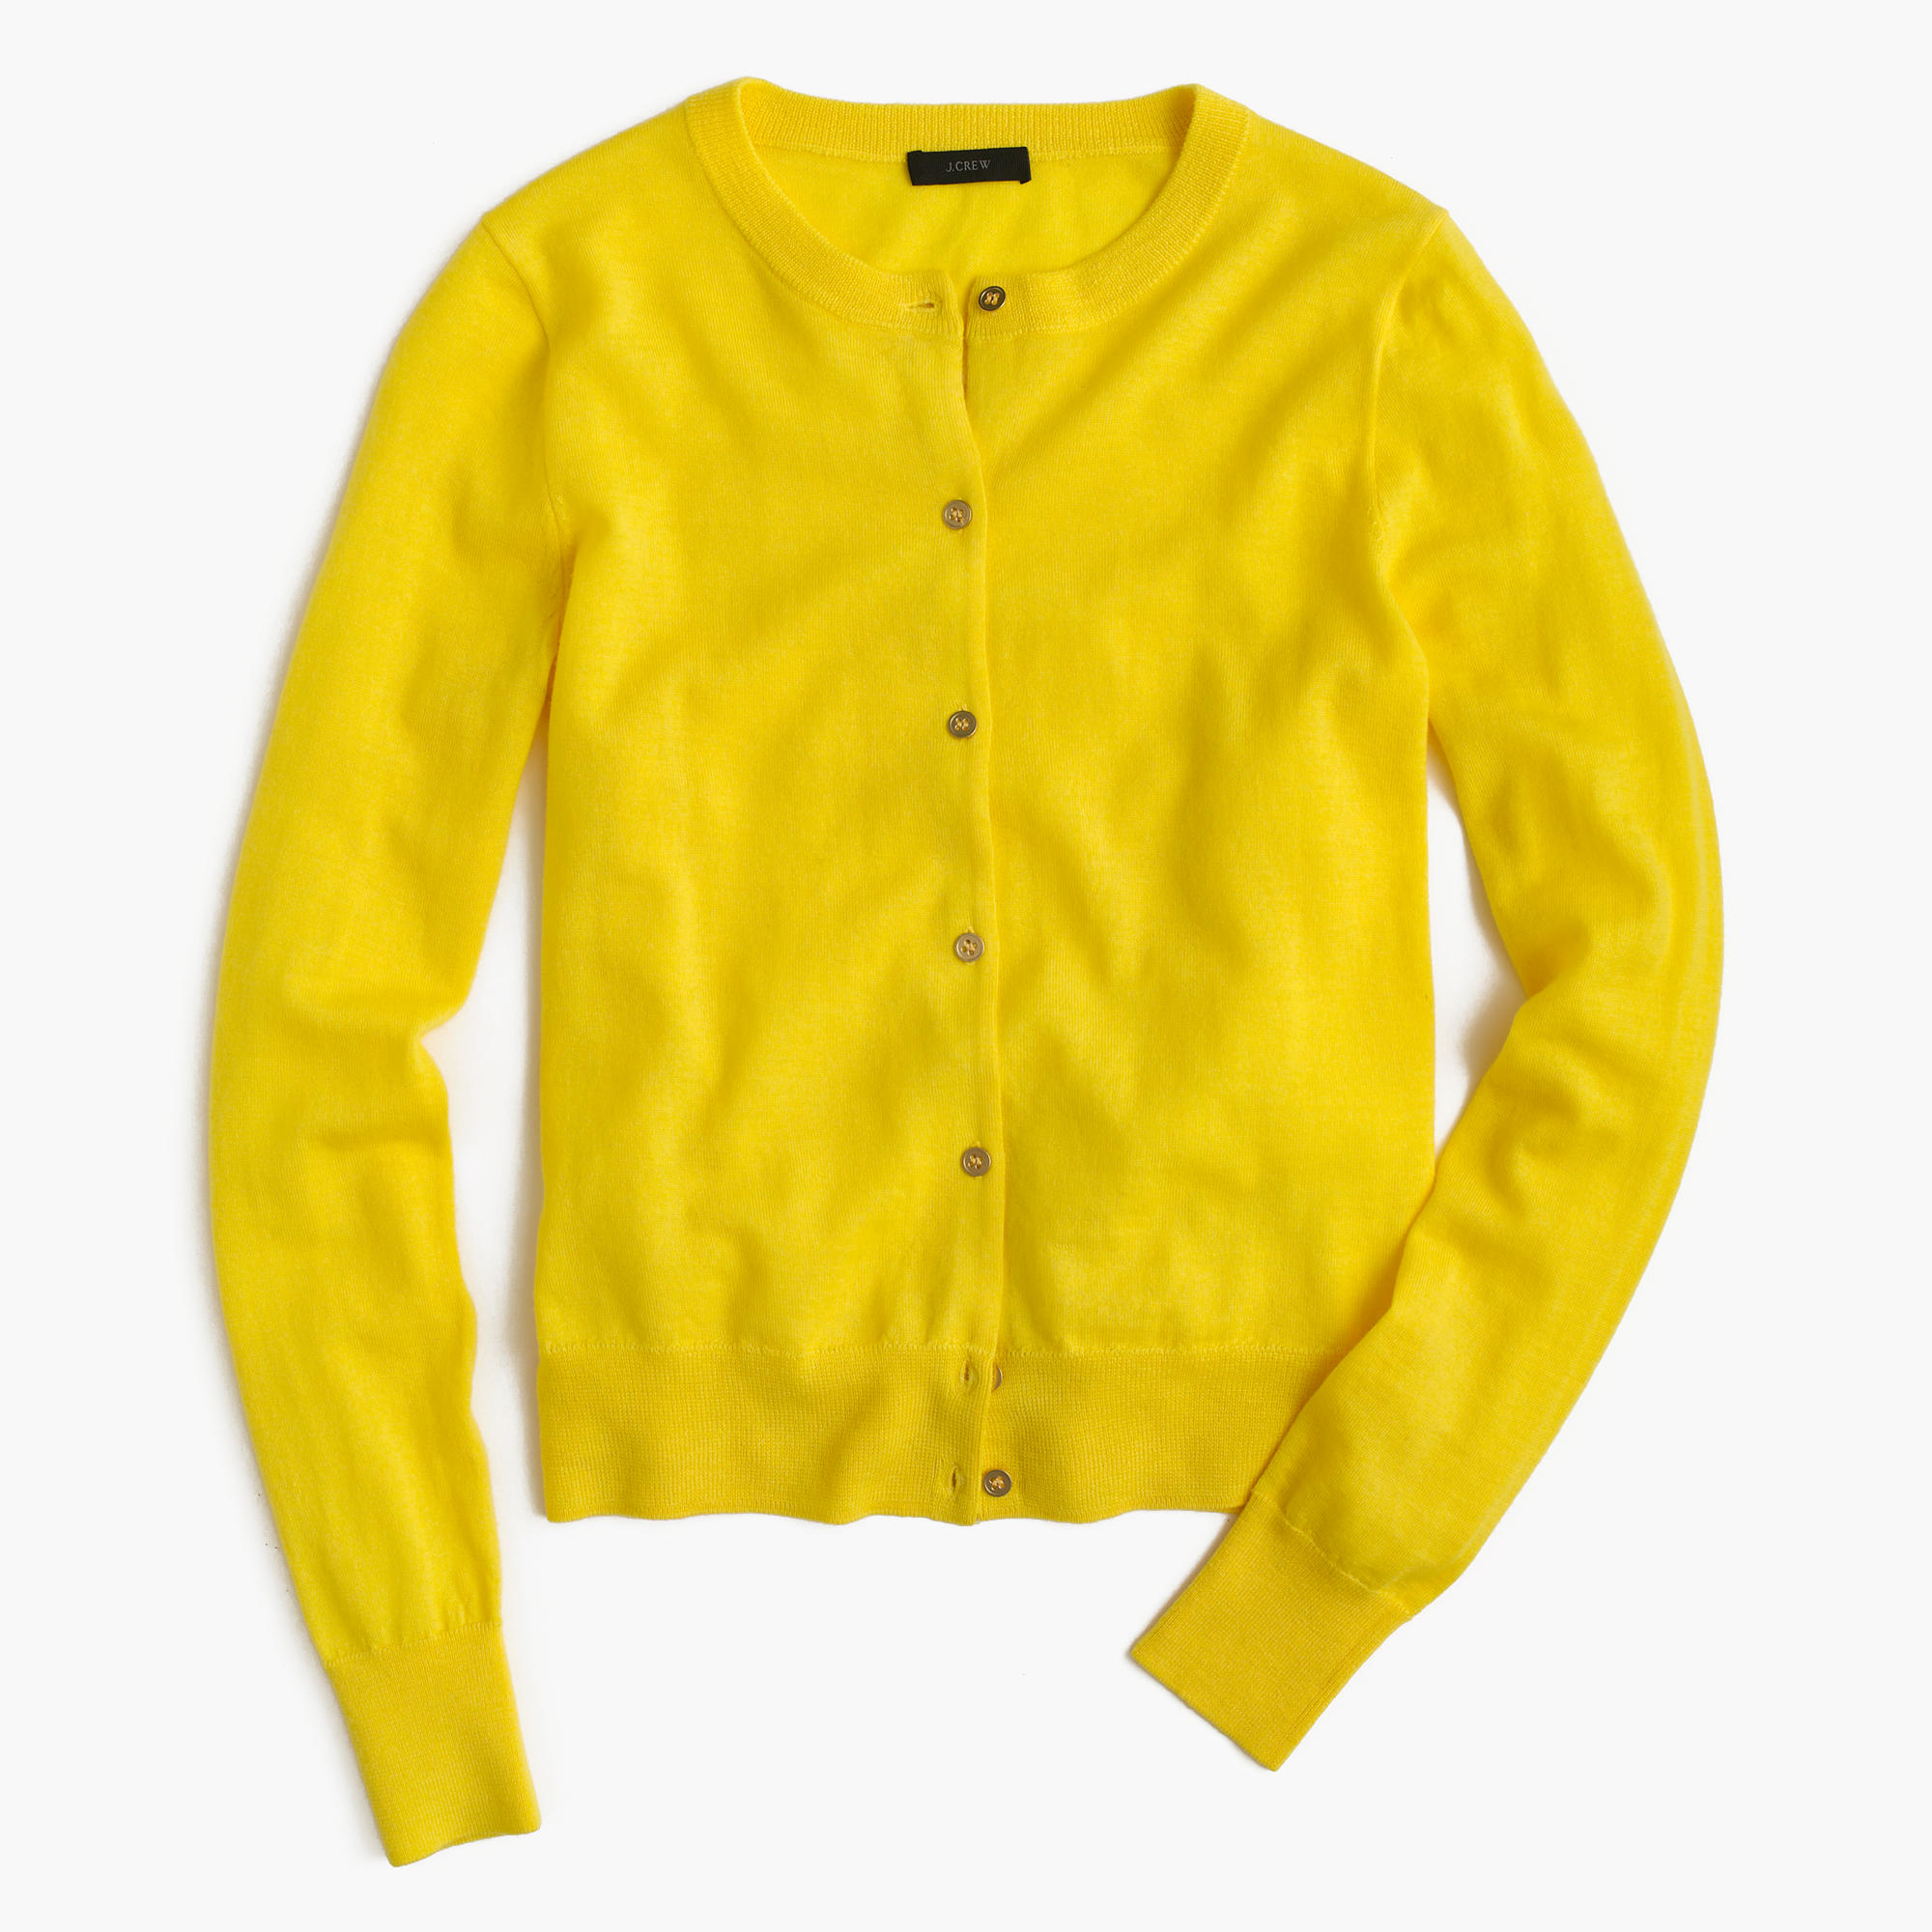 J.Crew Lightweight Wool Jackie Cardigan Sweater in Lemon (Yellow) - Lyst